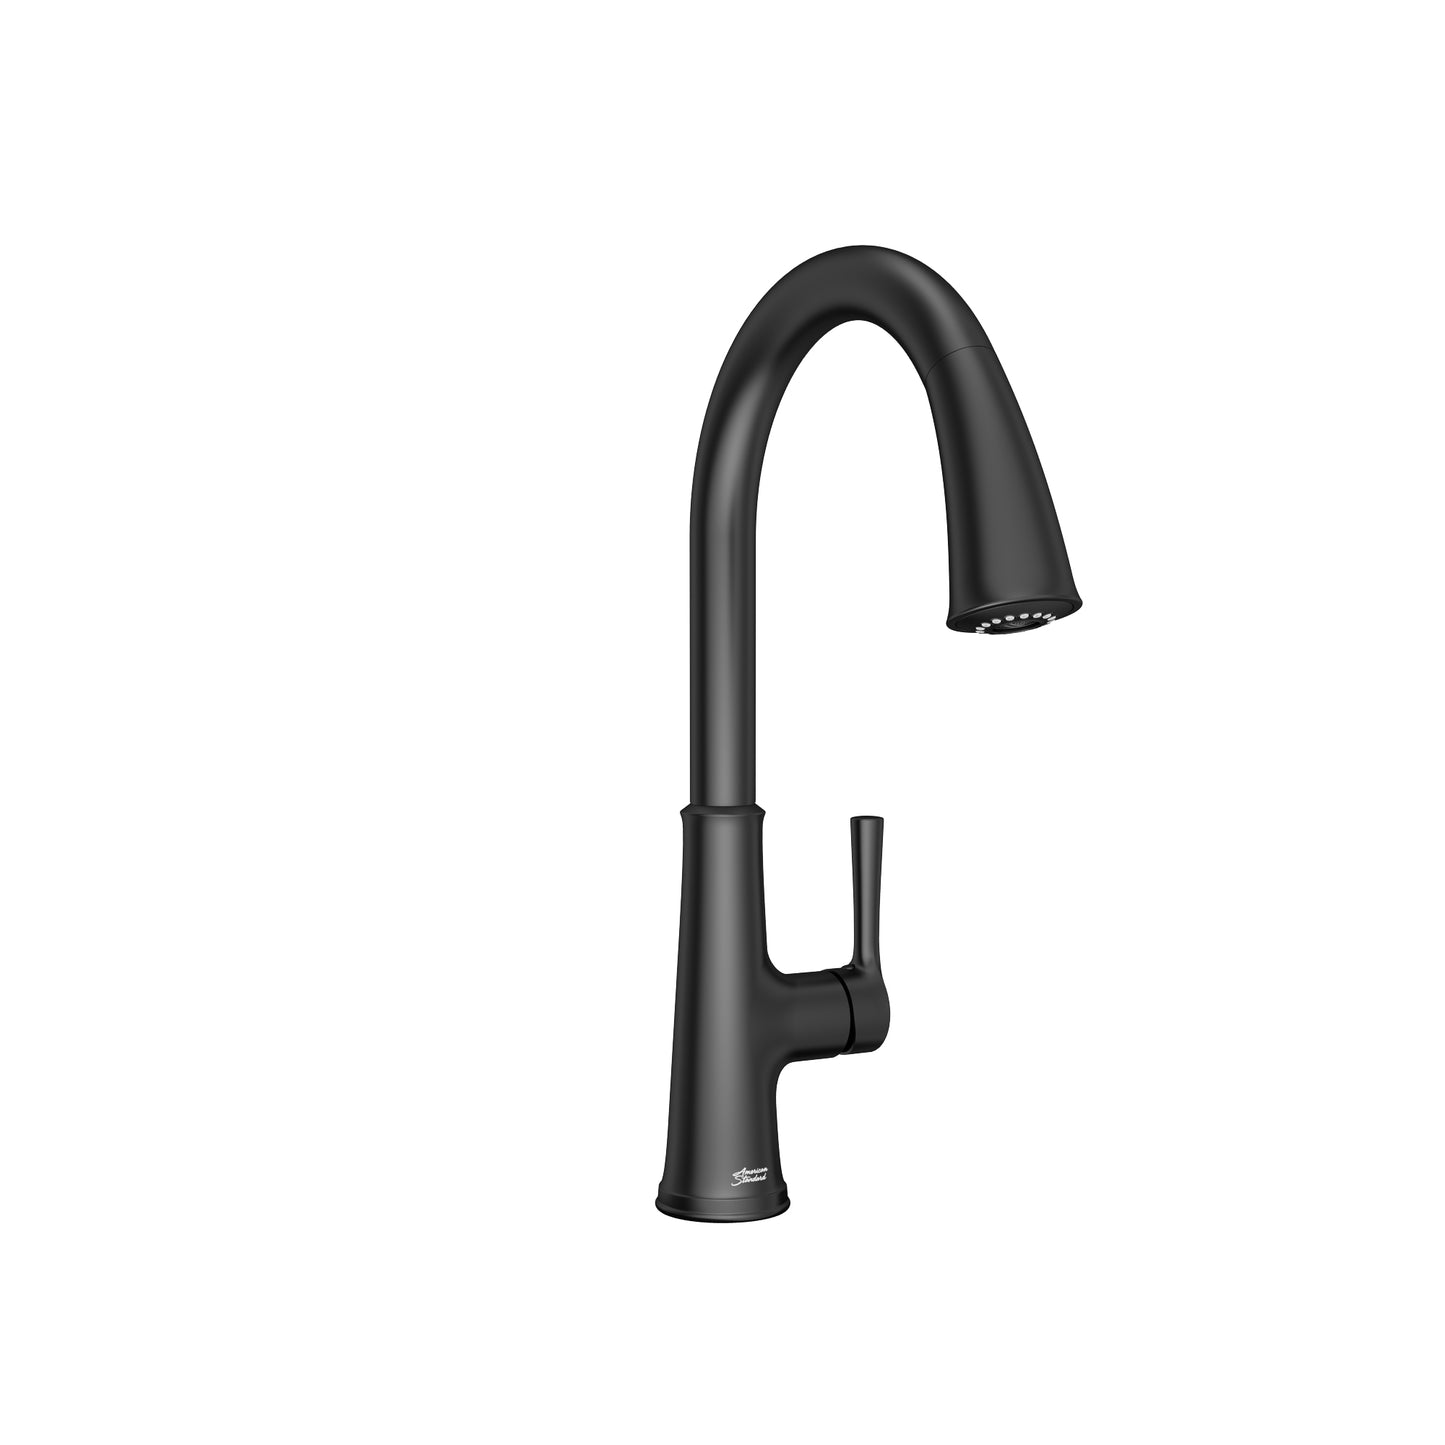 AMERICAN-STANDARD 9319310.243, Renate Single-Handle Pull-Down Dual Spray Kitchen Faucet 1.5 gpm/5.7 Lpm in Matte Black